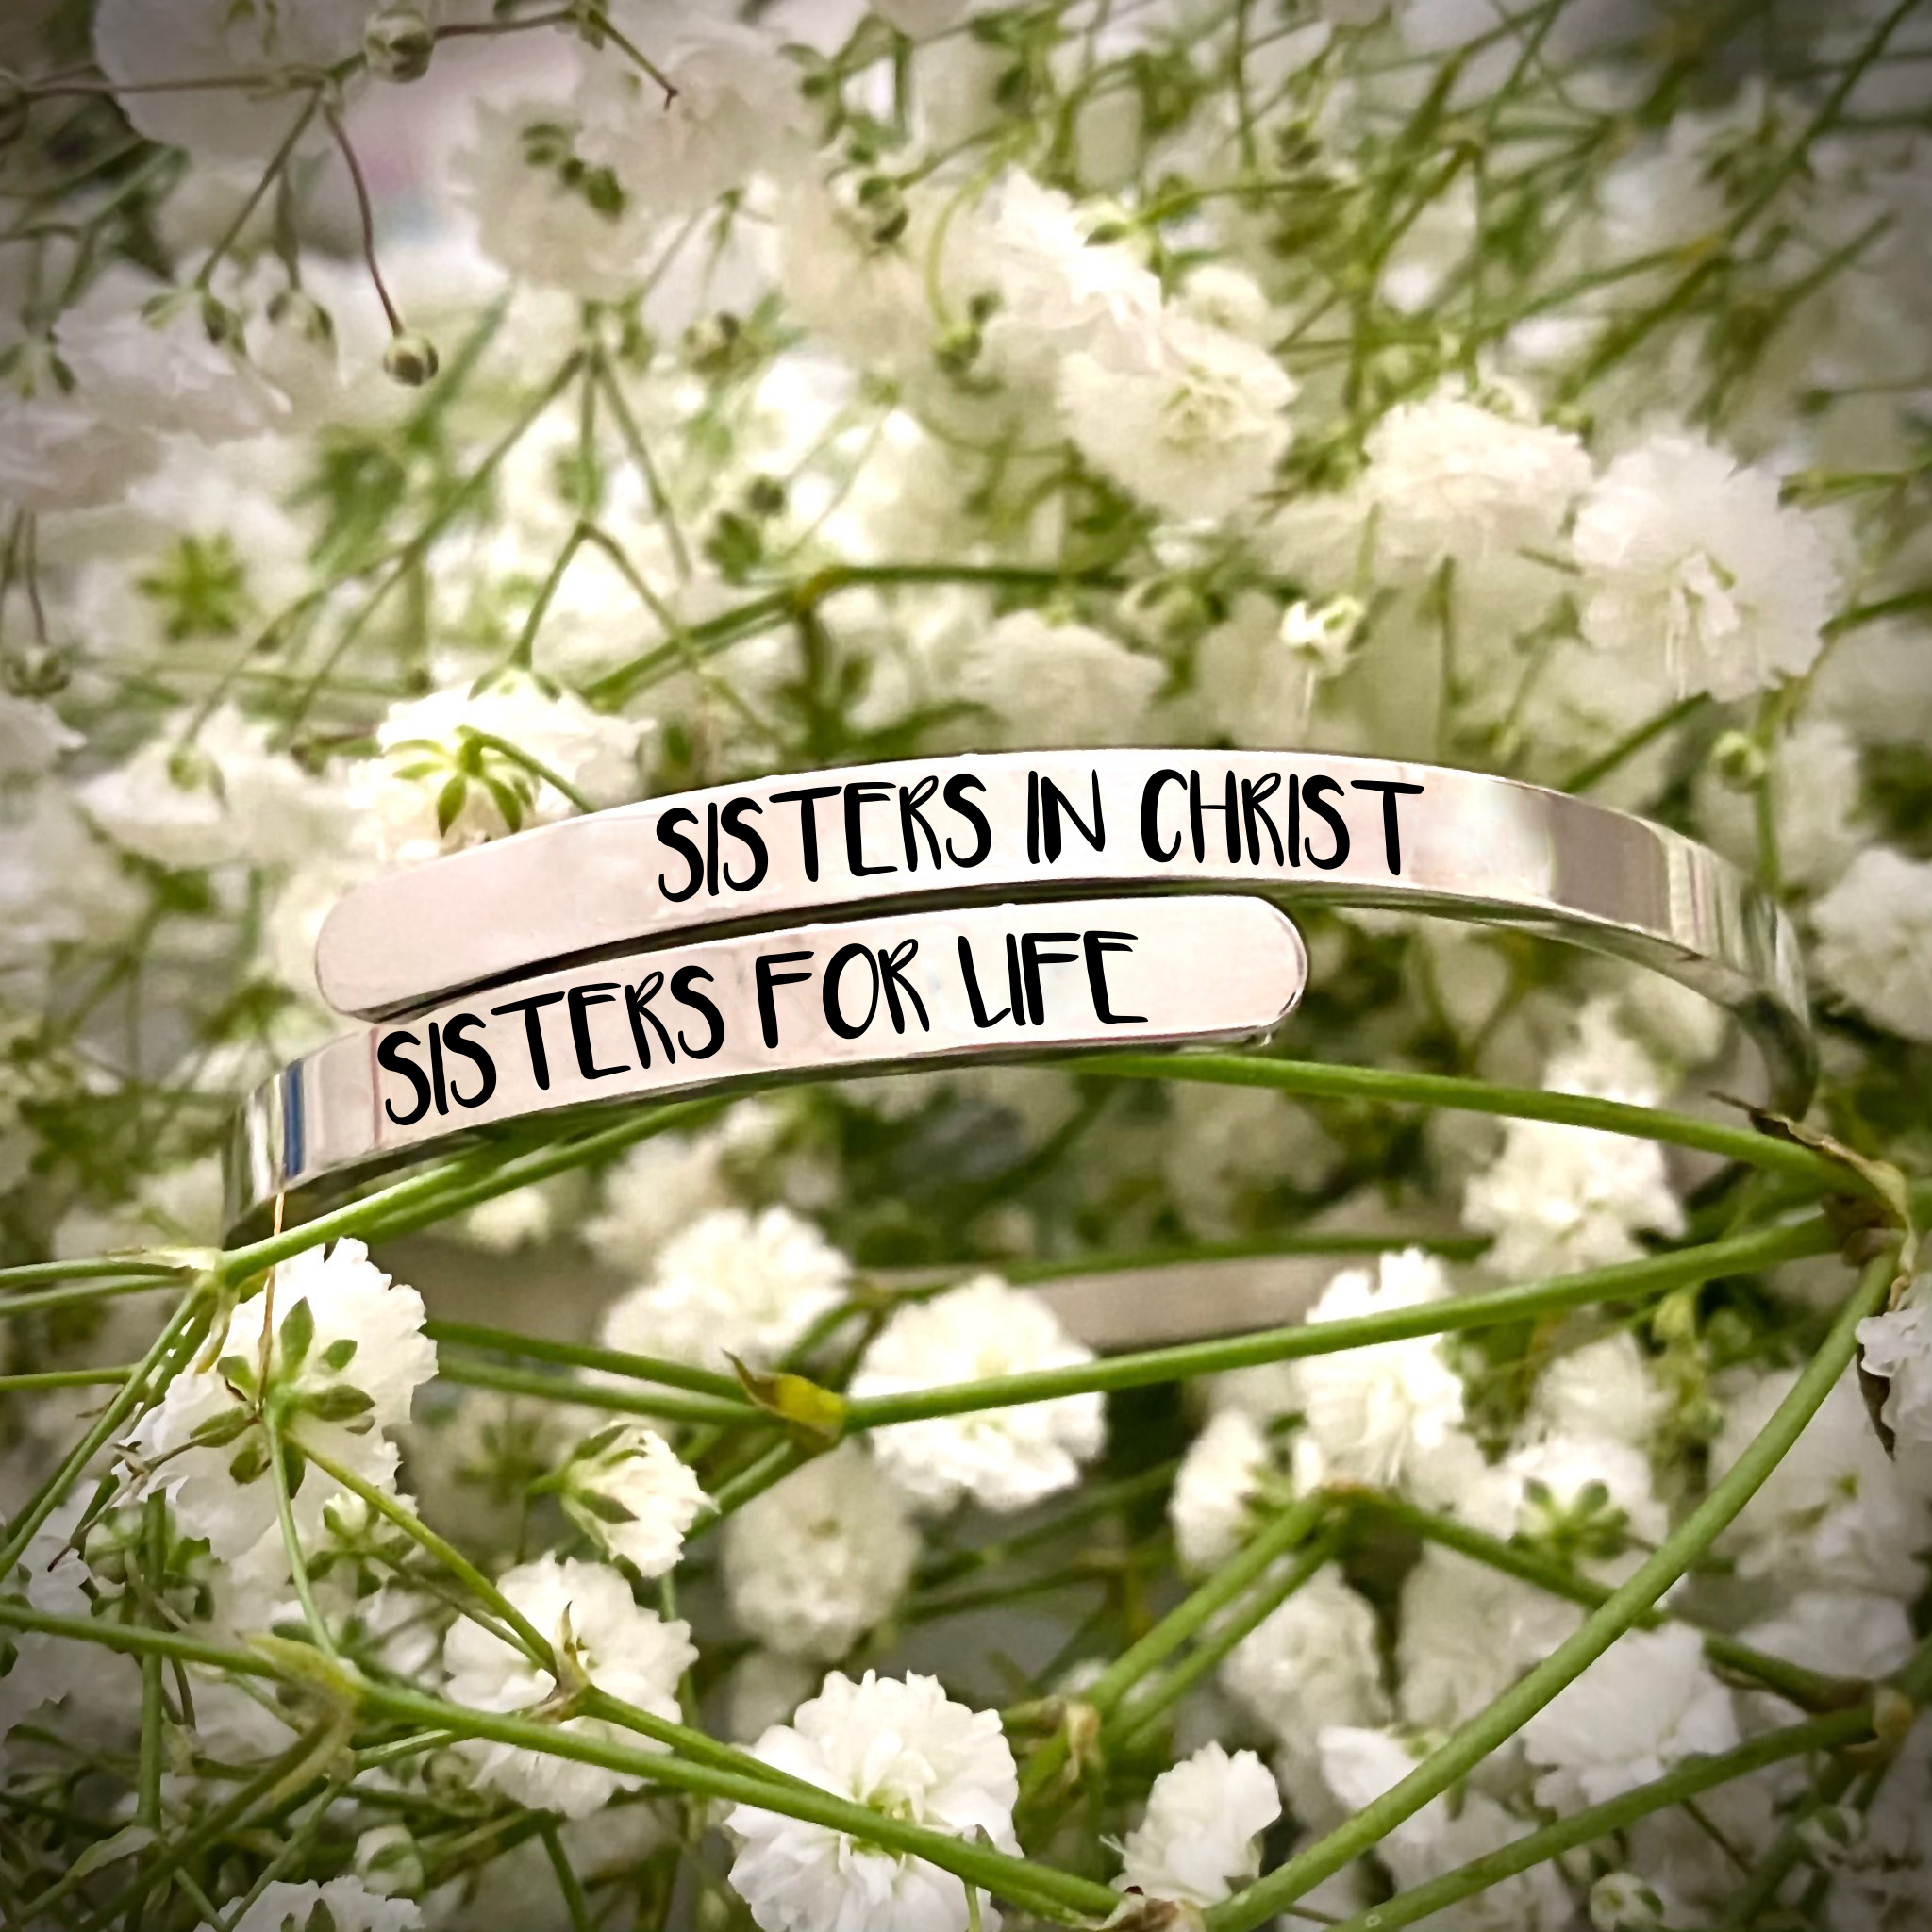 Sisters in Christ Bangle Bracelet